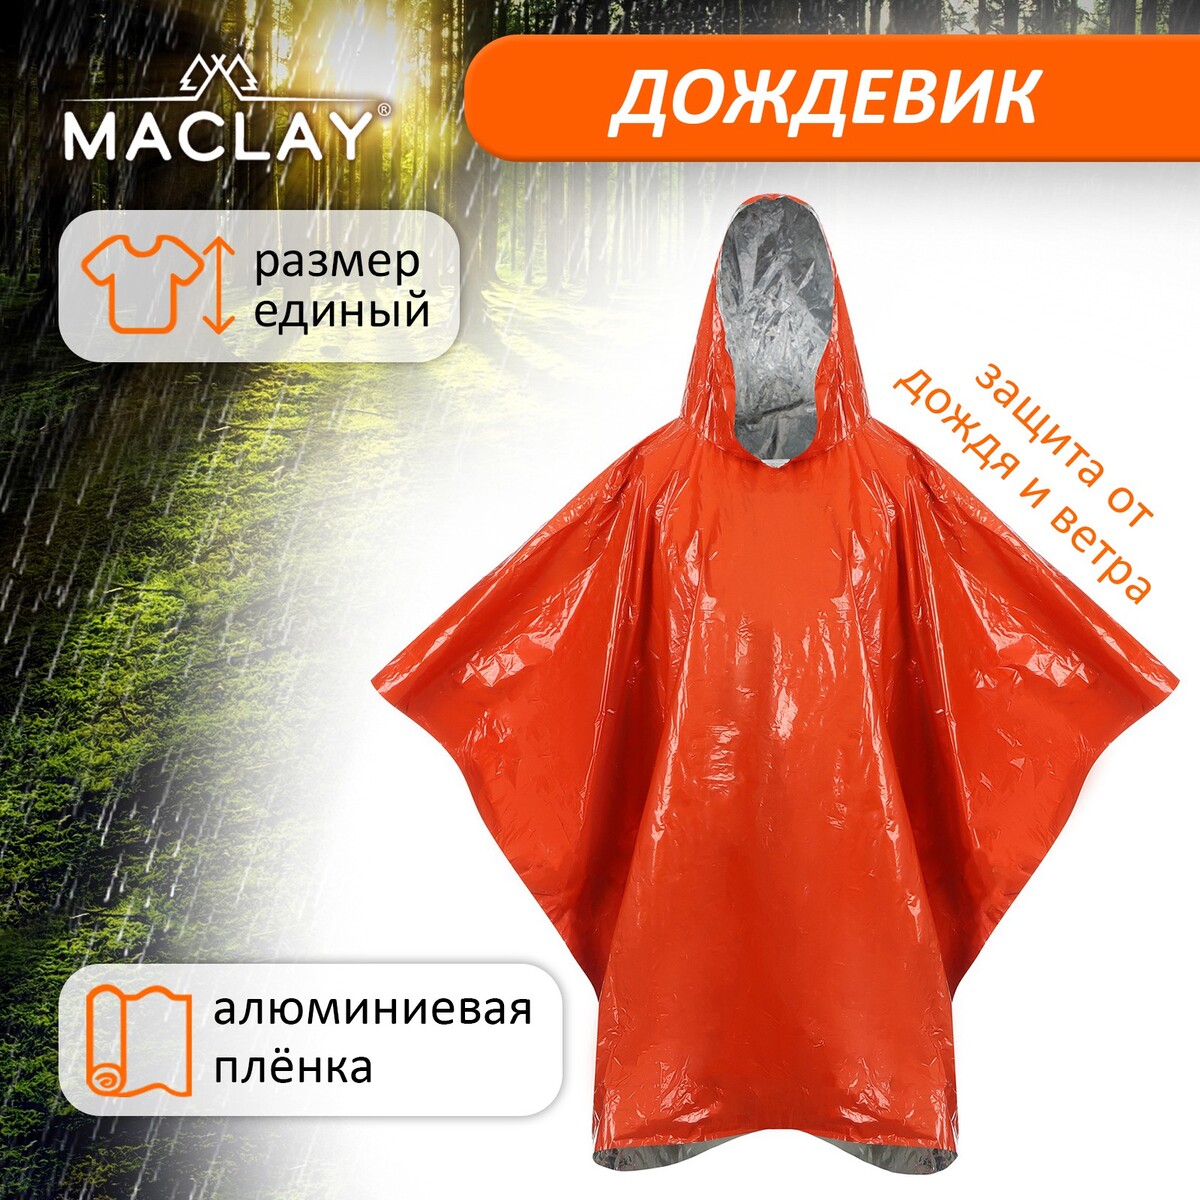 Дождевик maclay, фольгированный, 100х125 см, цвет оранжевый Maclay